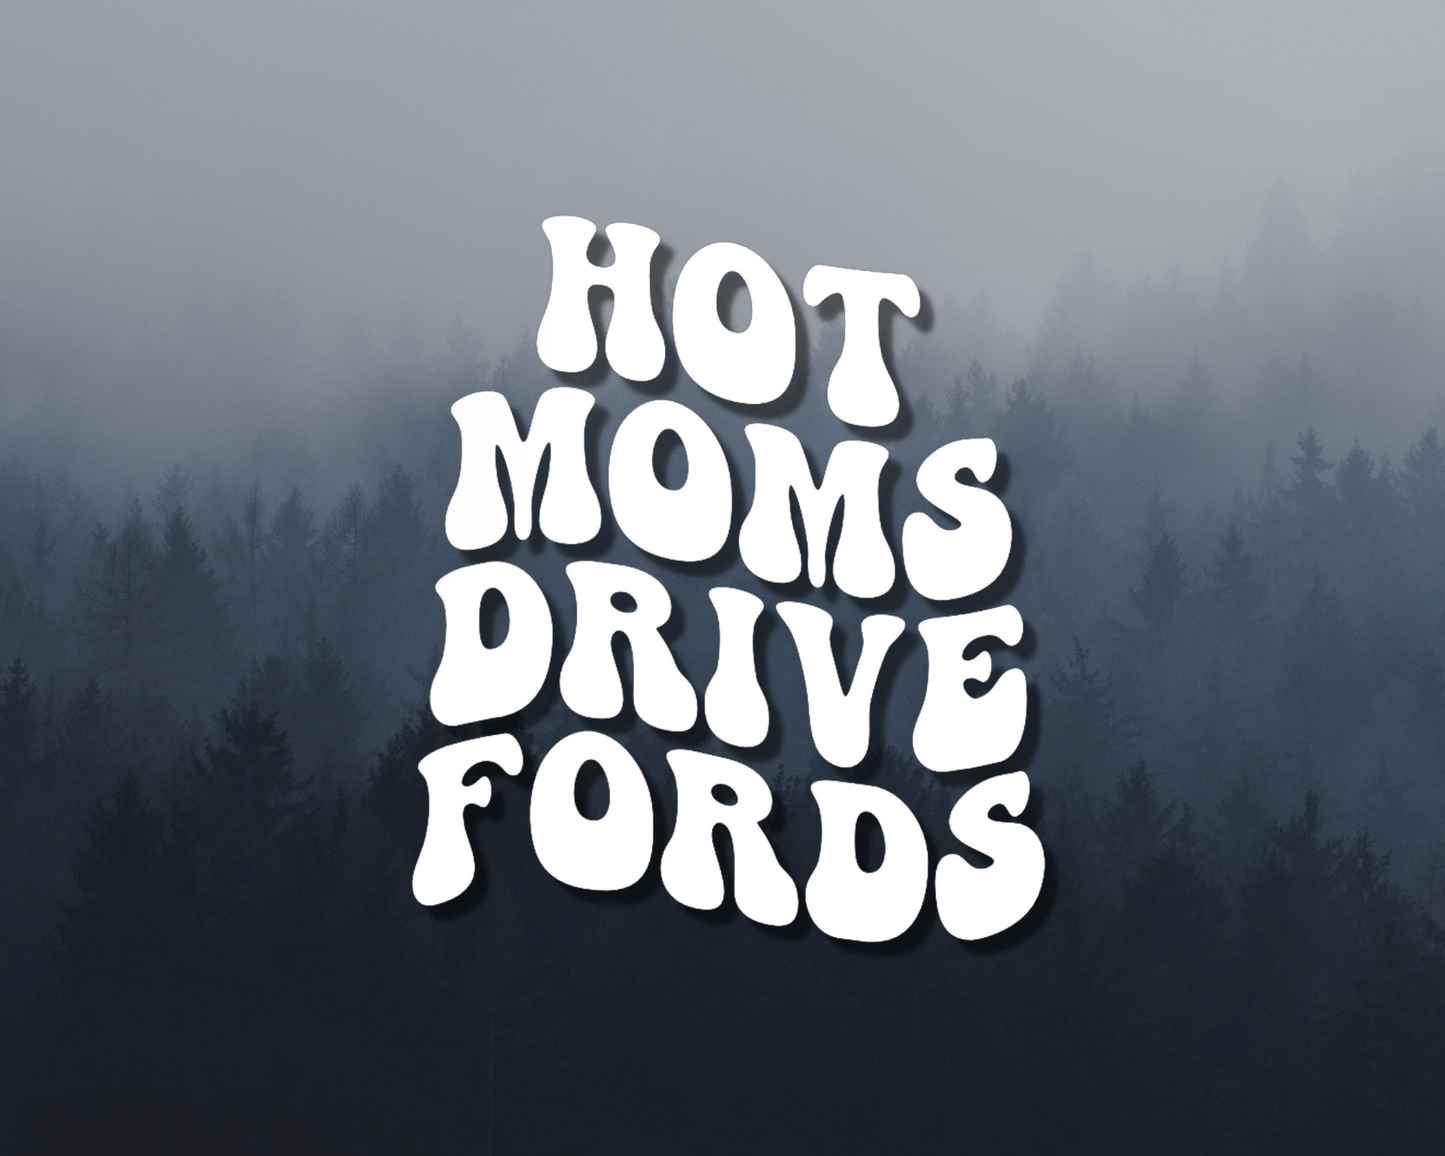 Hot Moms Drive Subarus